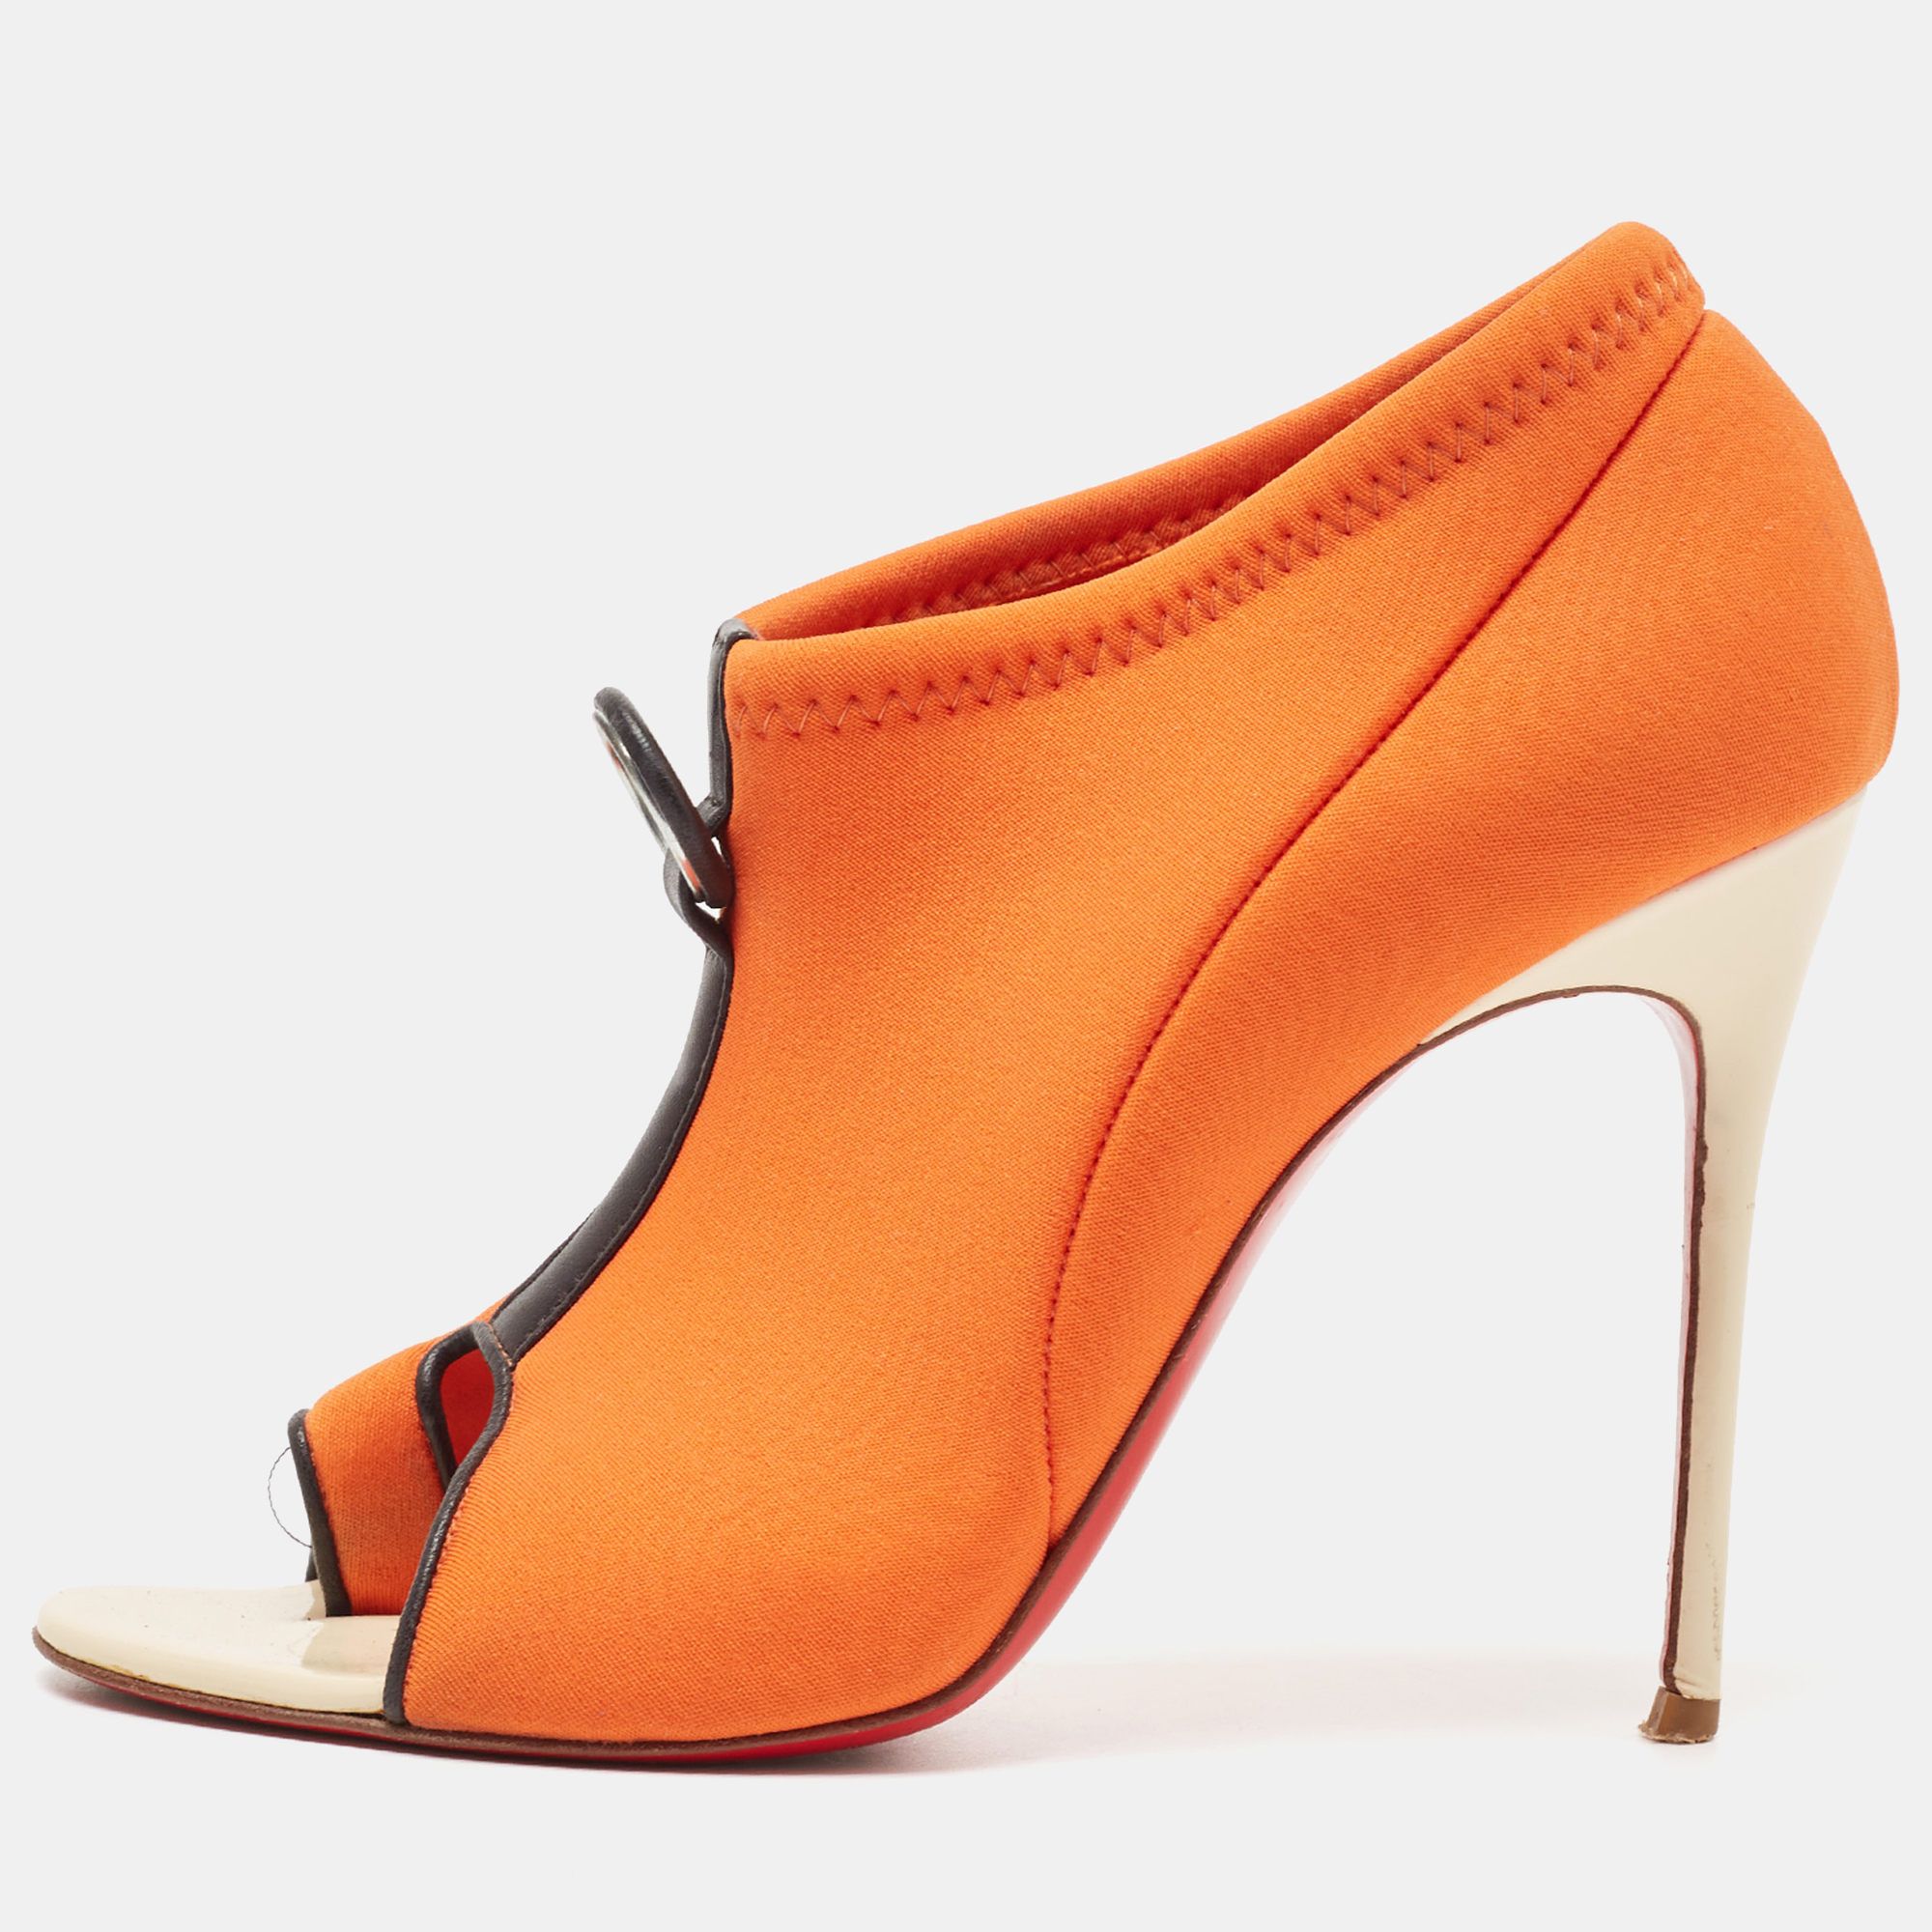 Christian louboutin orange fabric peep toe  sandals size 38